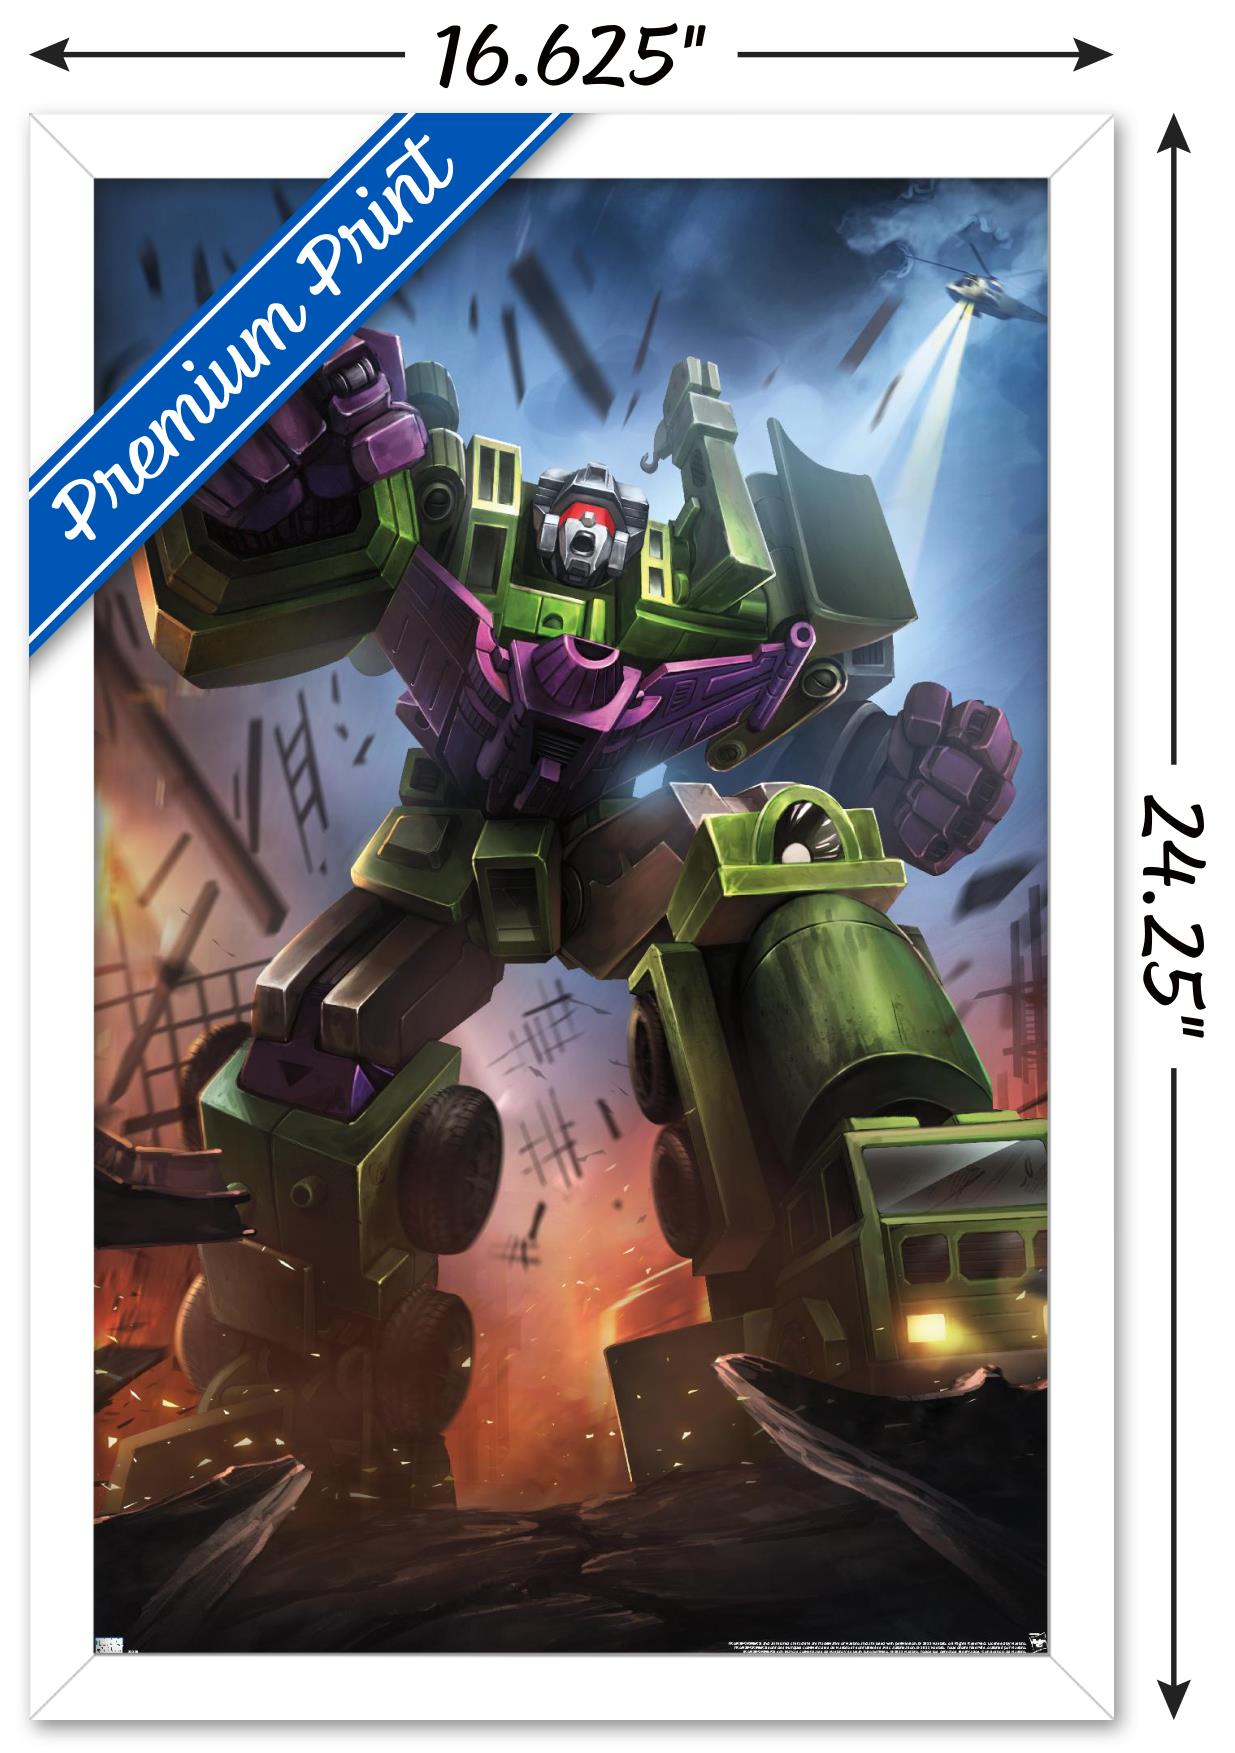 Hasbro Transformers - Devastator Wall Poster, 14.725" x 22.375" Framed - image 3 of 6